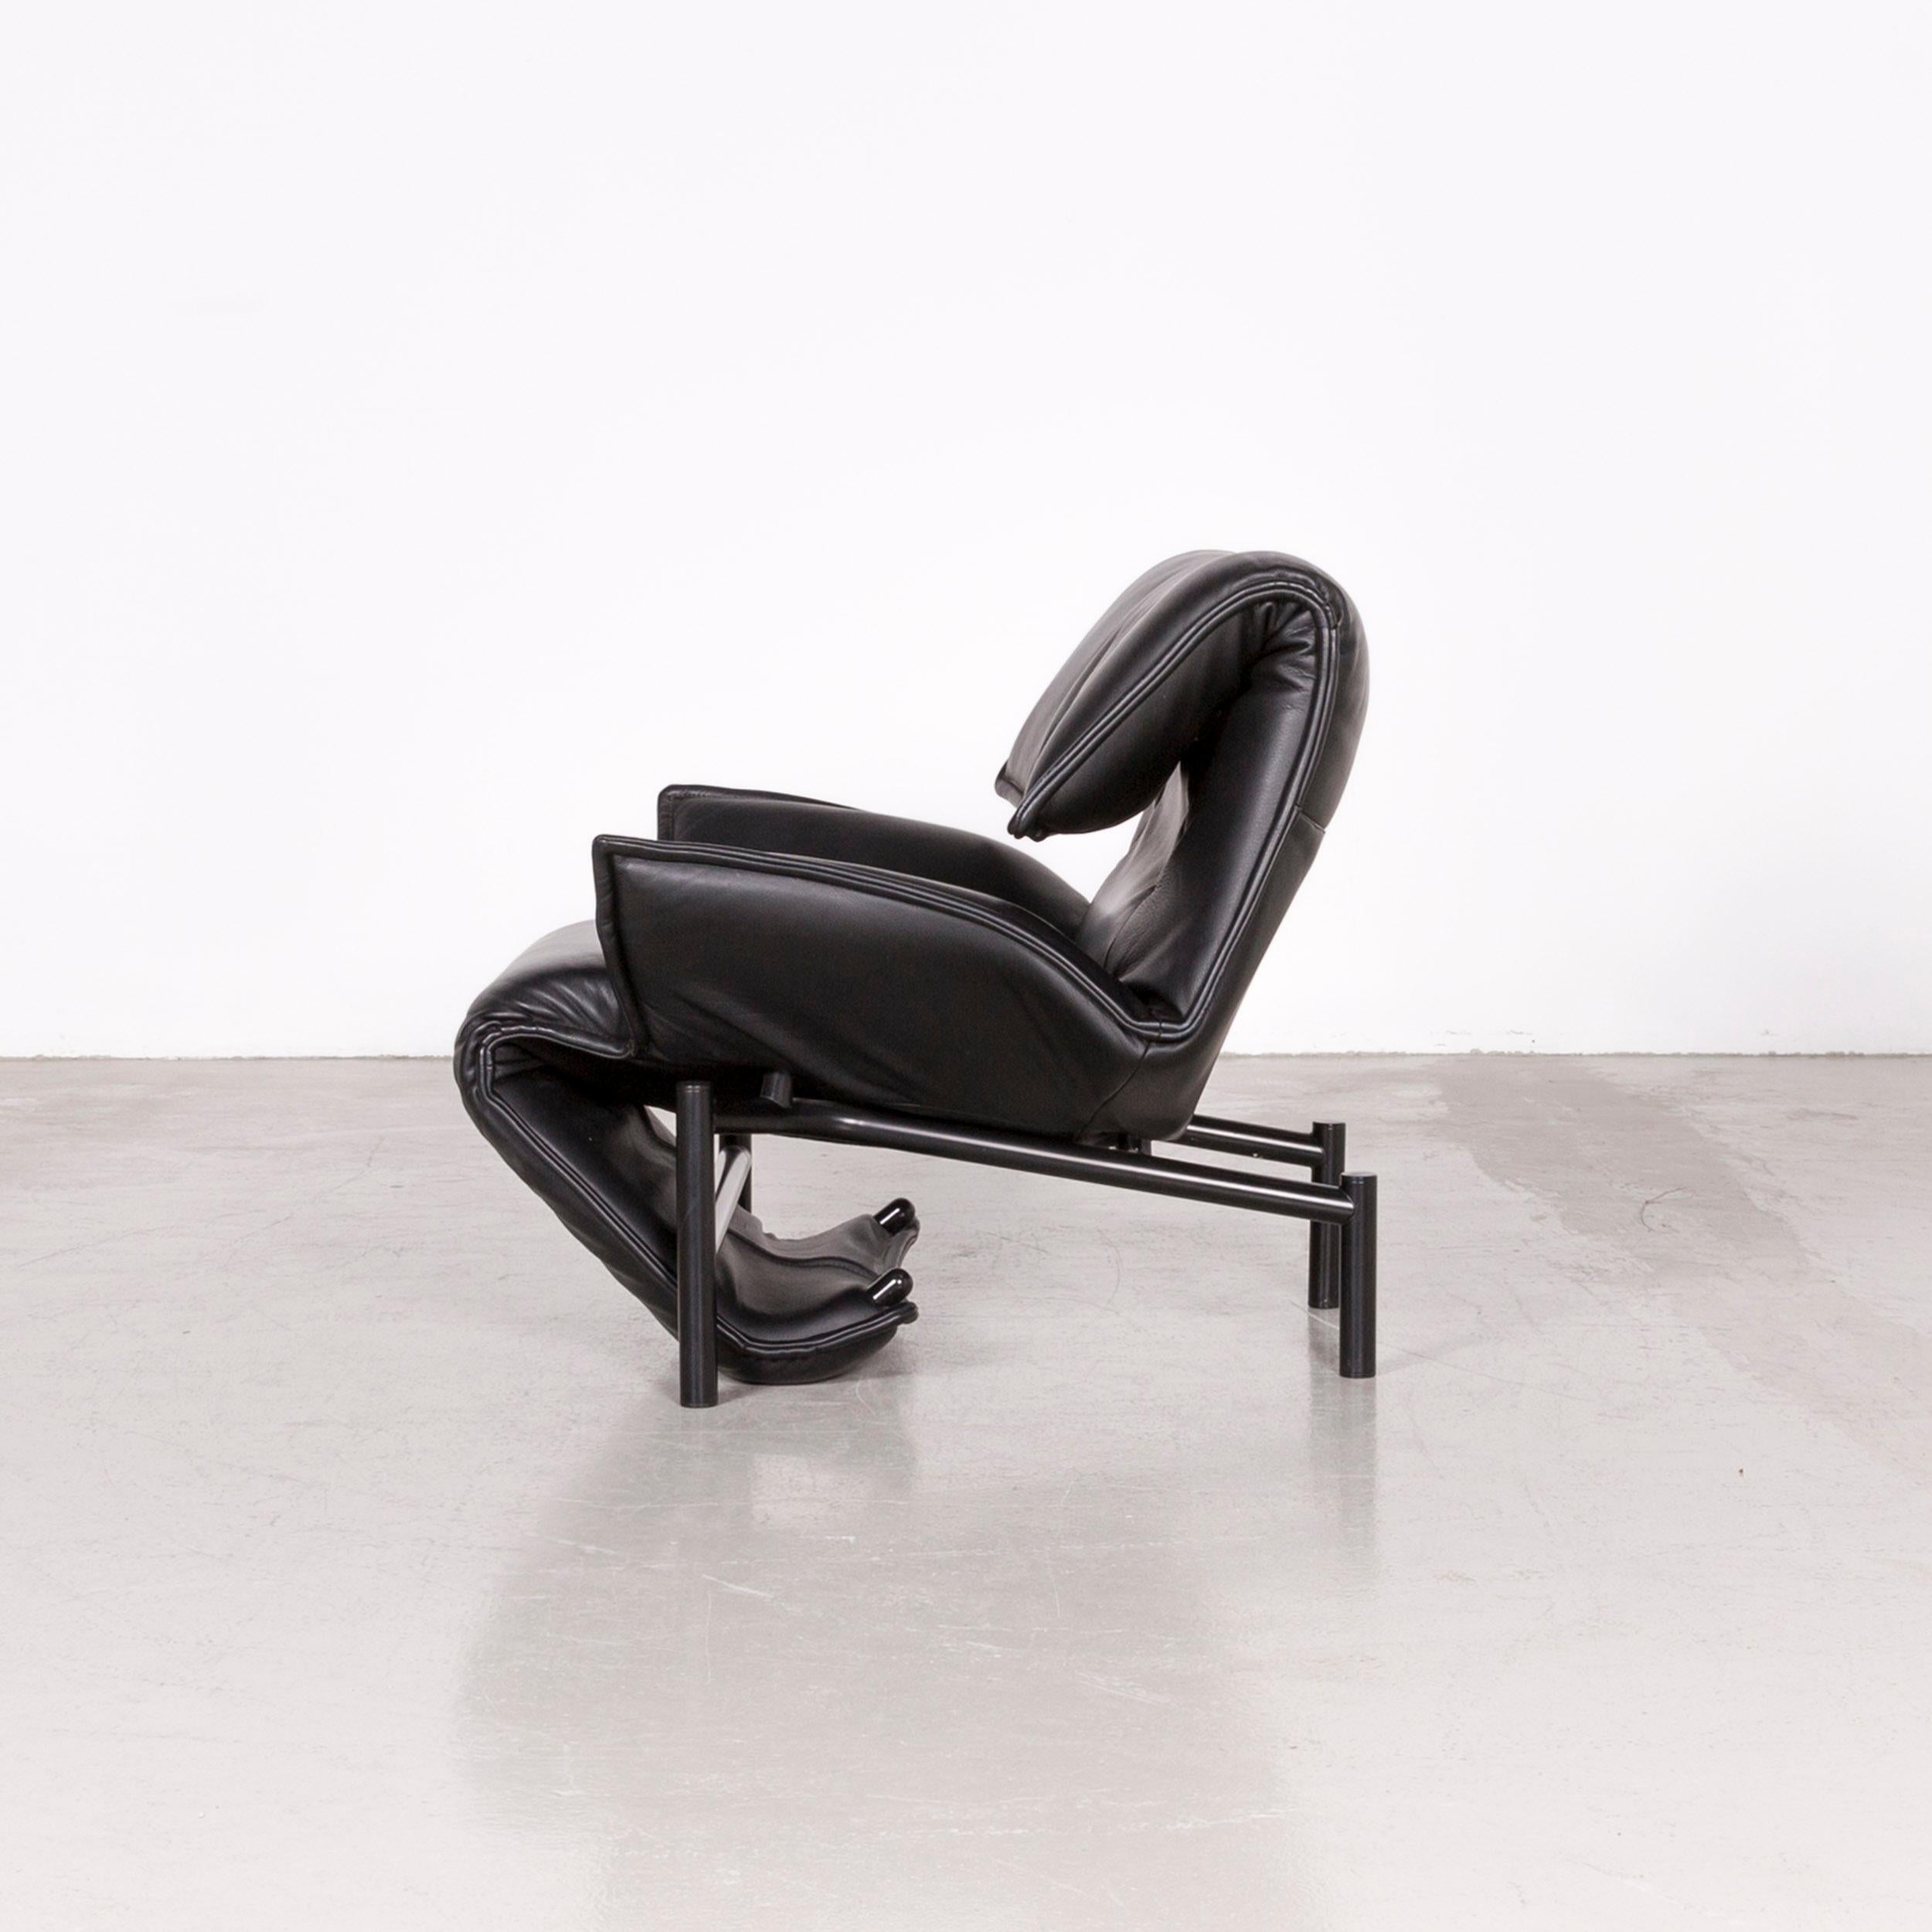 Cassina Veranda Designer Leather Armchair in Black Recliner Function For Sale 2